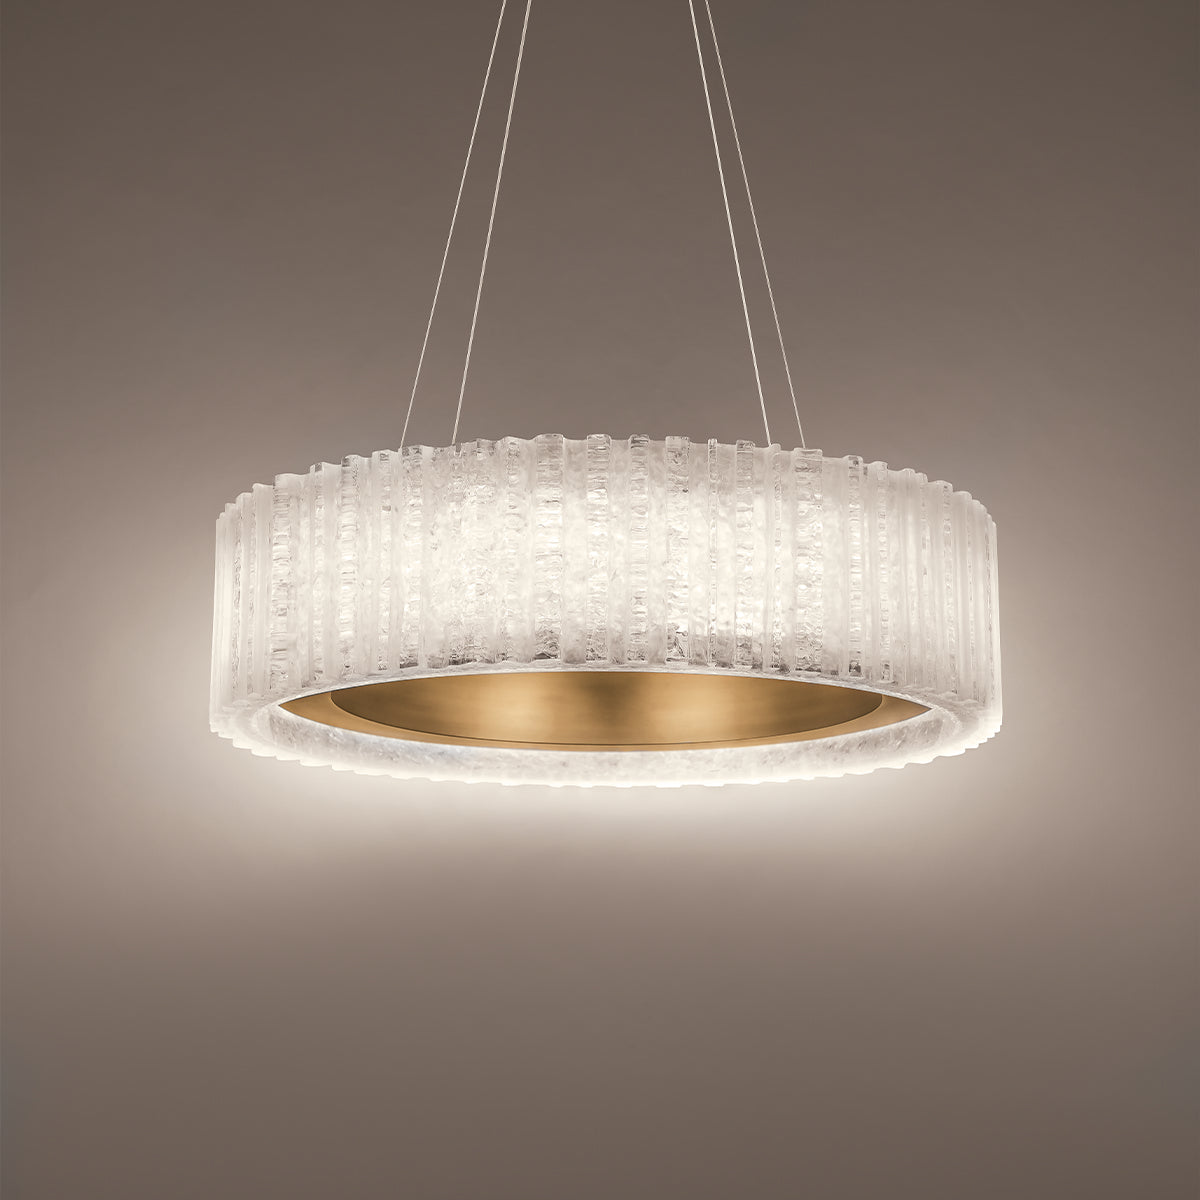 Modern Forms Canada - LED Chandelier - Rhiannon - Aged Brass- Union Lighting Luminaires Decor